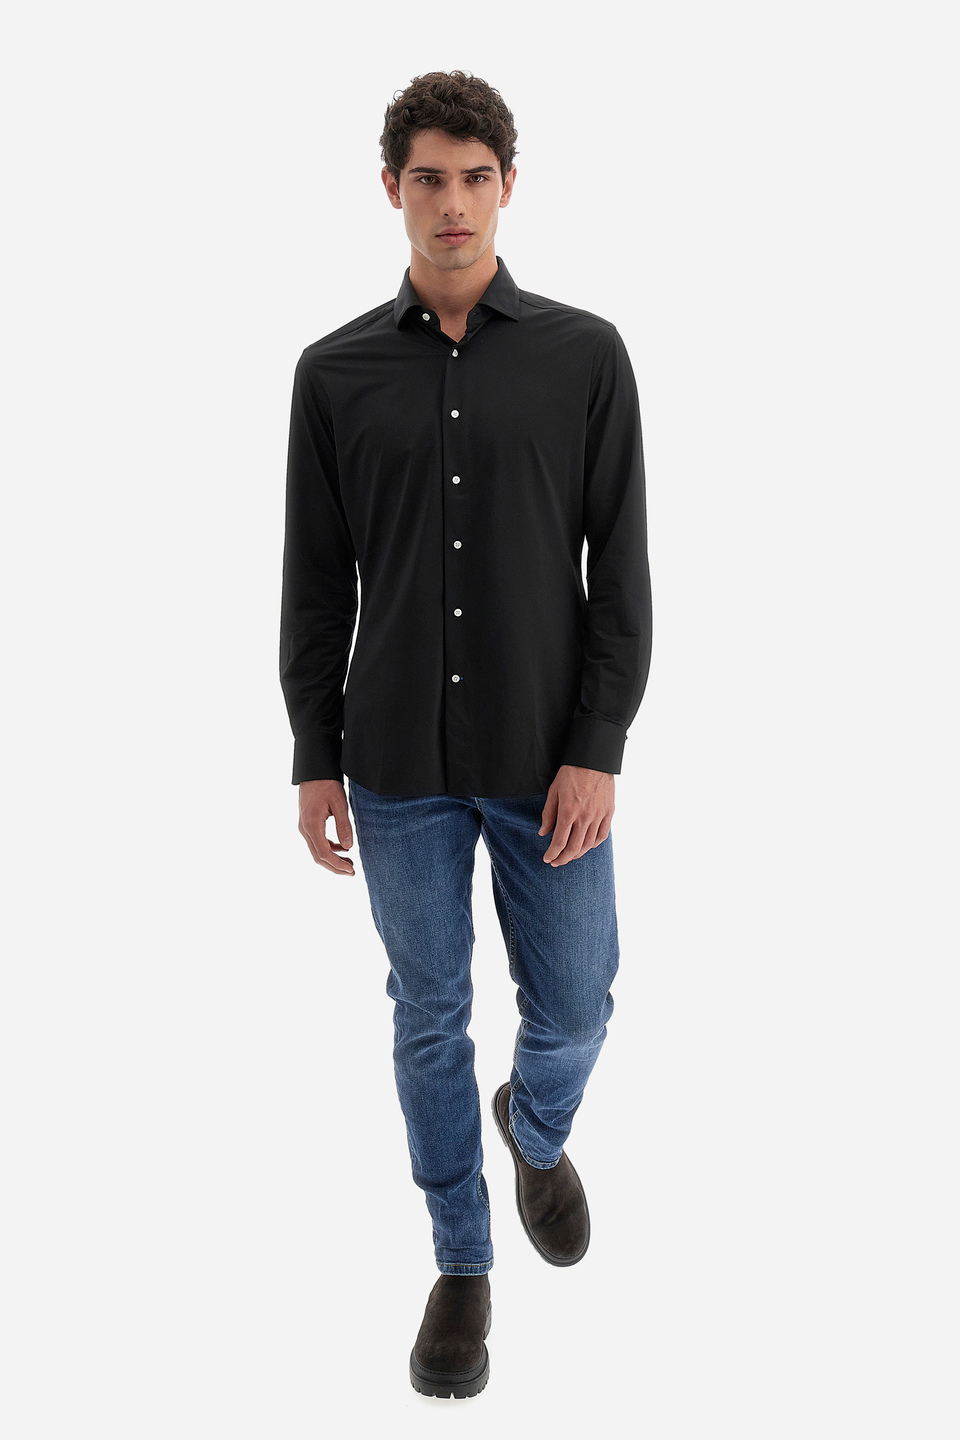 Men’s Blue Ribbon Shirt in Cotton Jersey Regular Fit Long Sleeves | La Martina - Official Online Shop